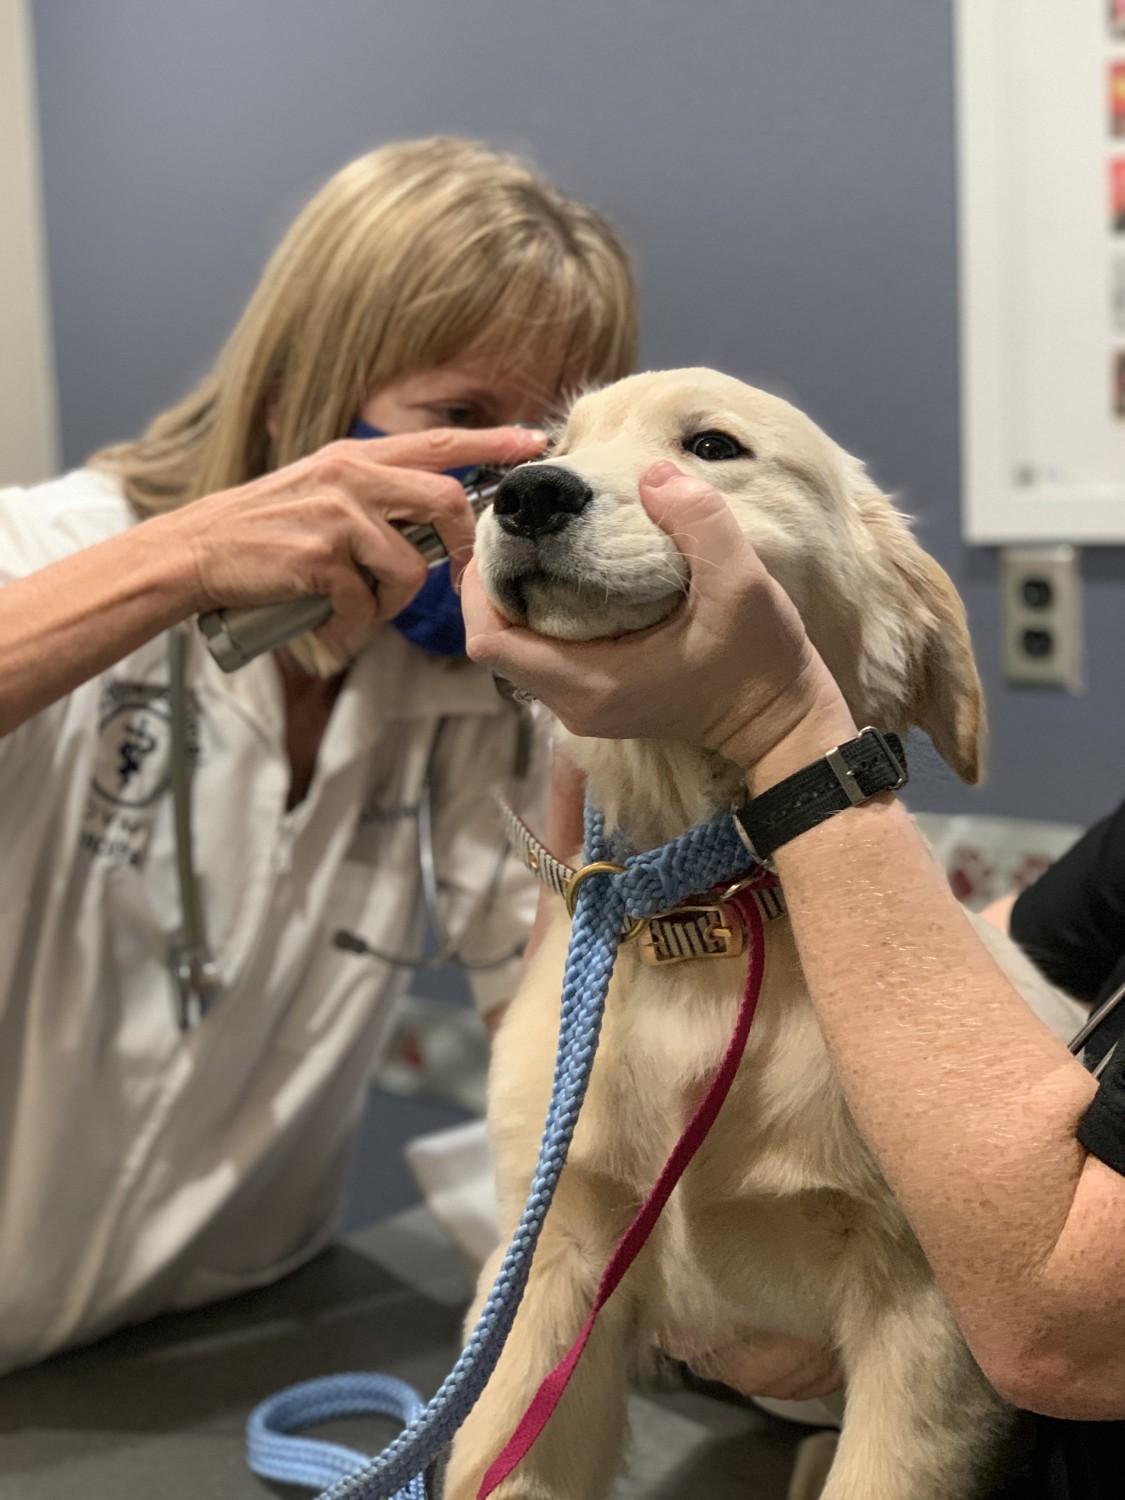 Doctor examining a dog